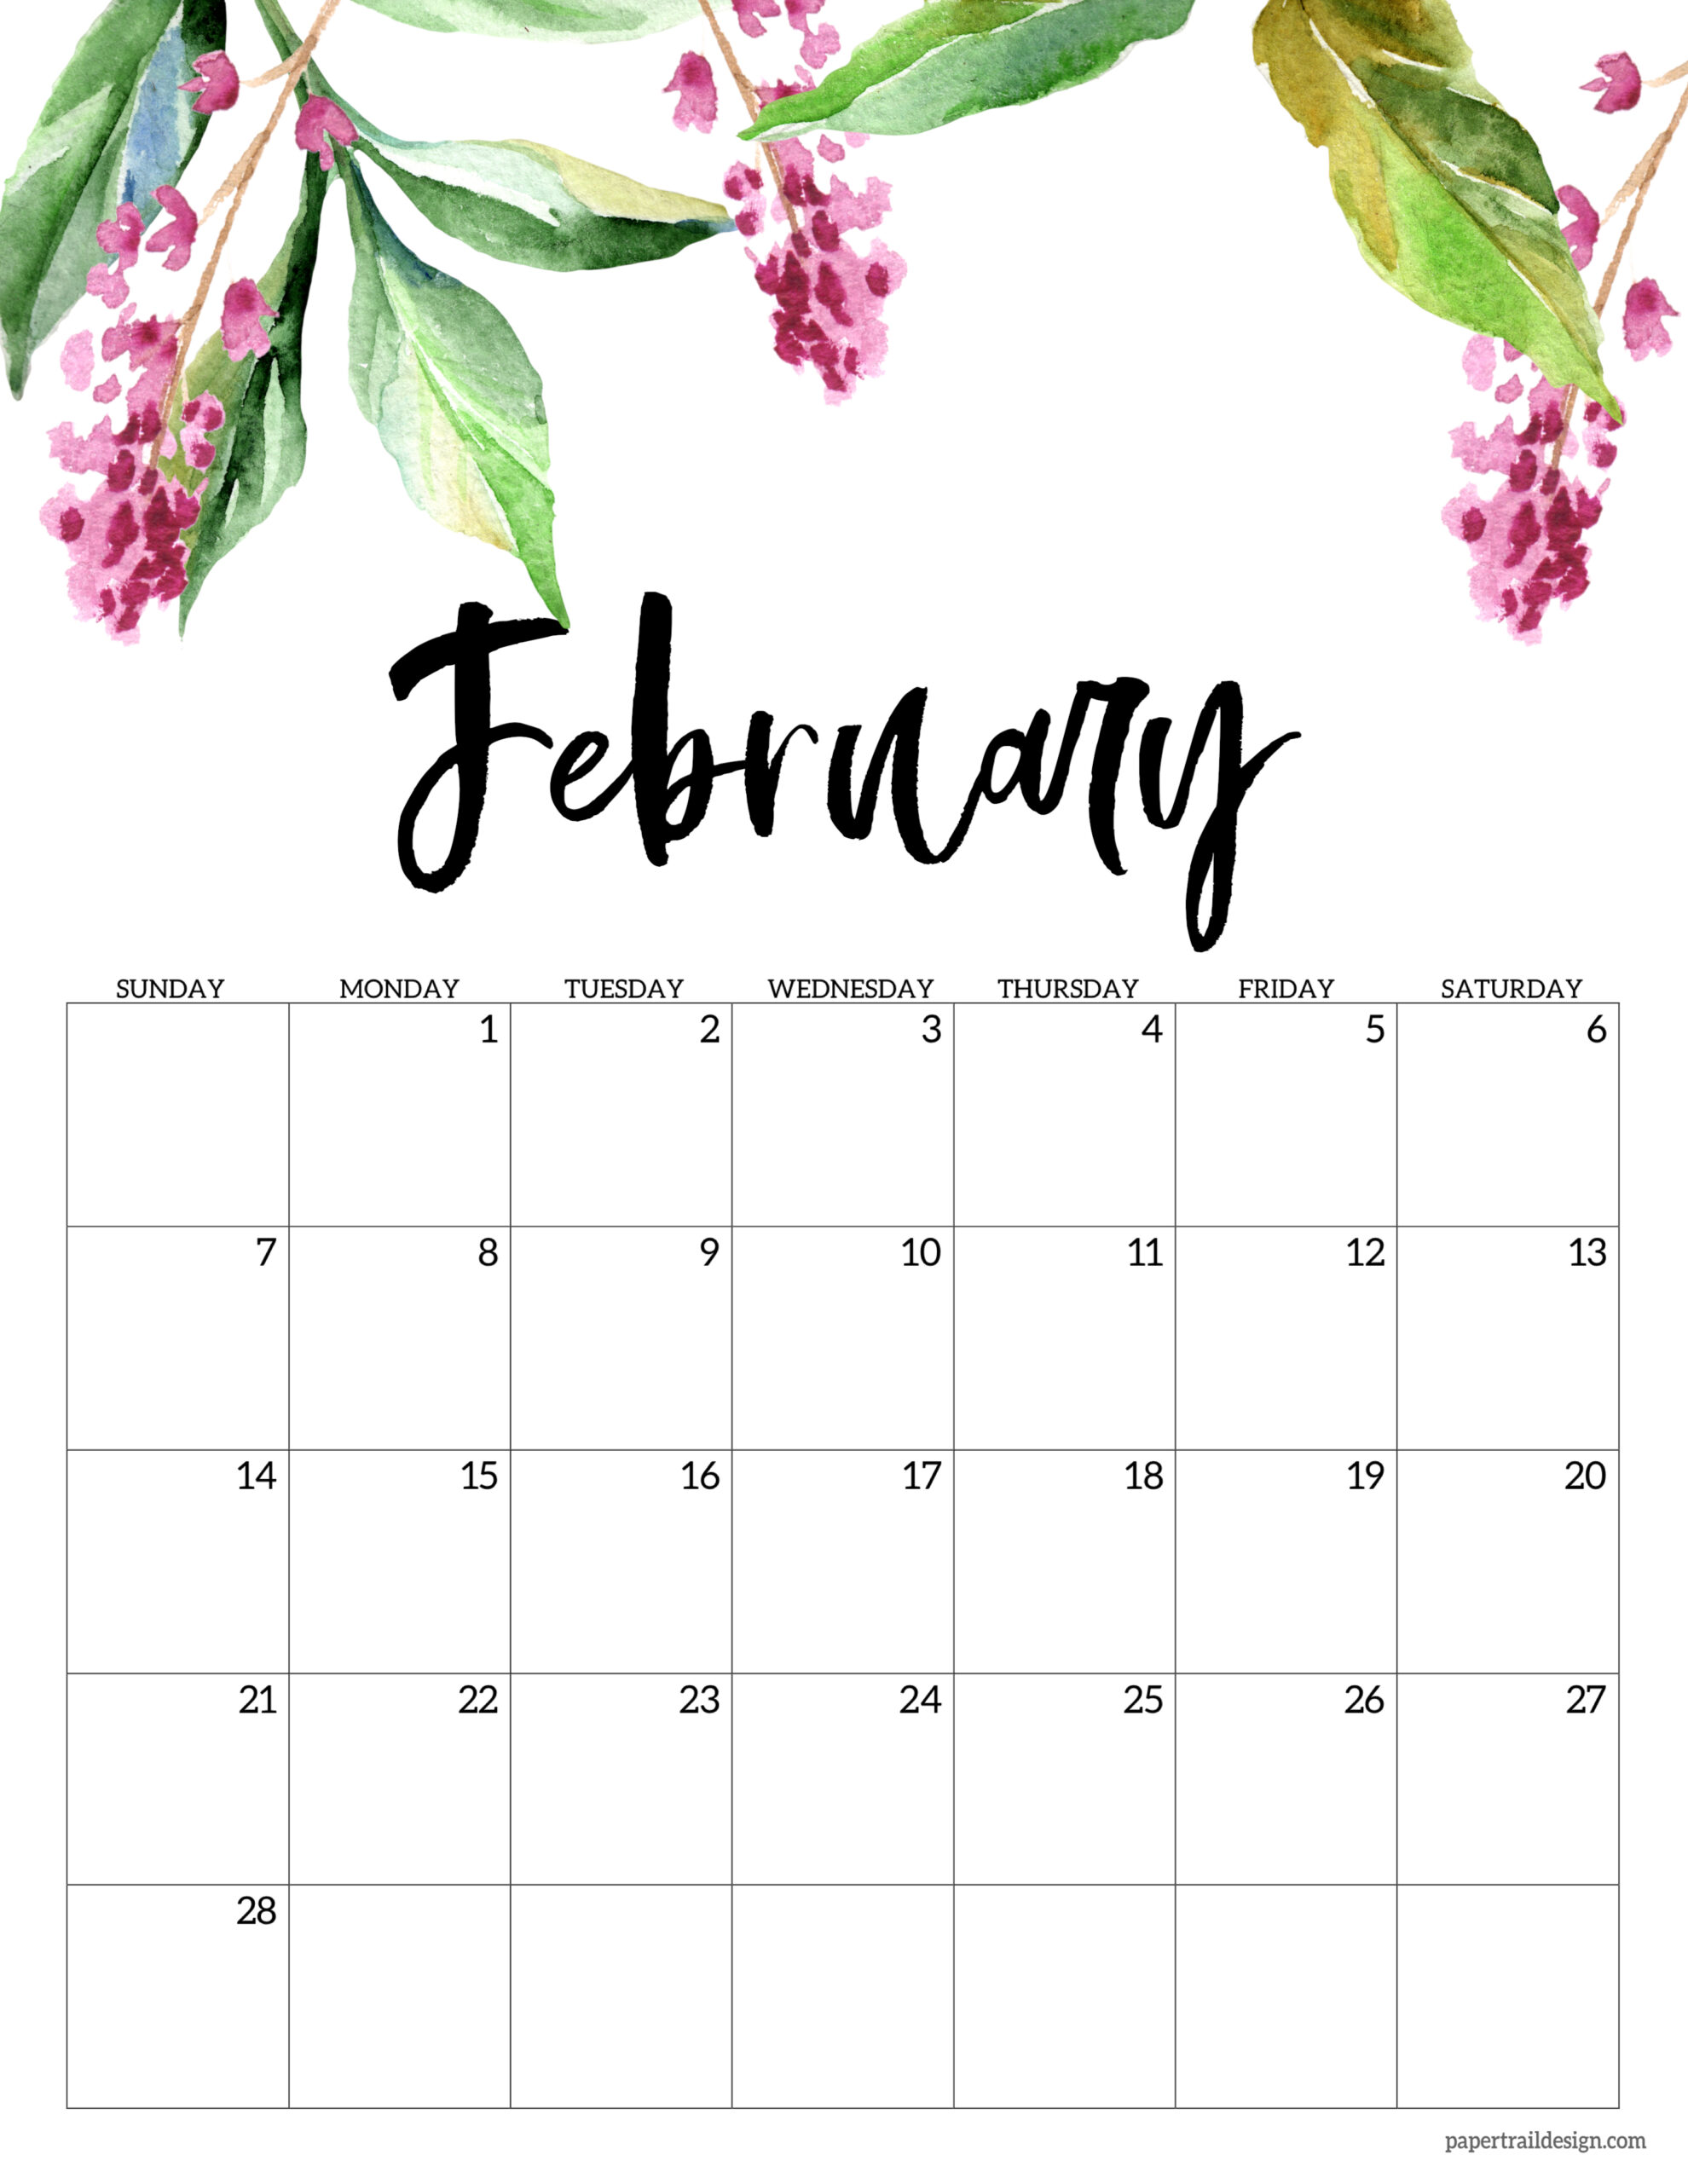 Free Printable Calendar 2021 - Floral | Paper Trail Design